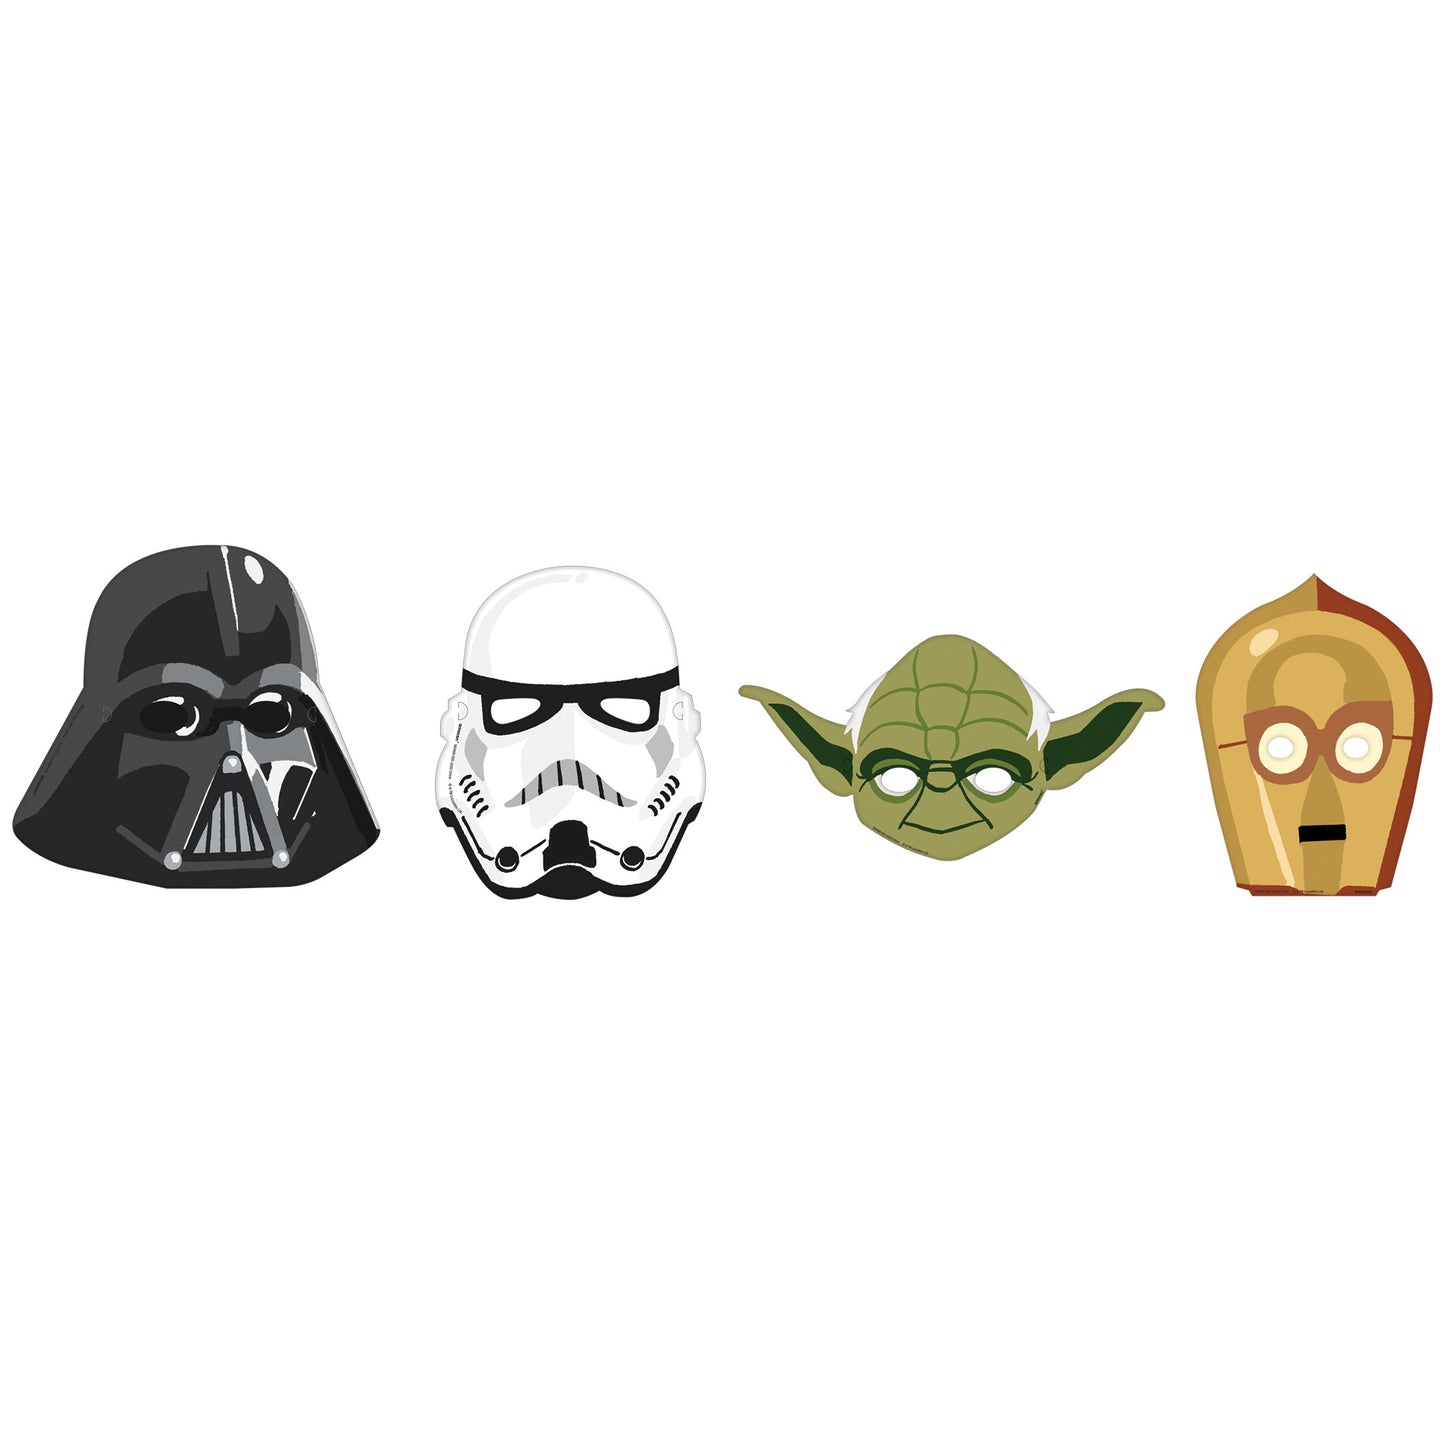 Star Wars Galaxy Party Masks, 8-pc